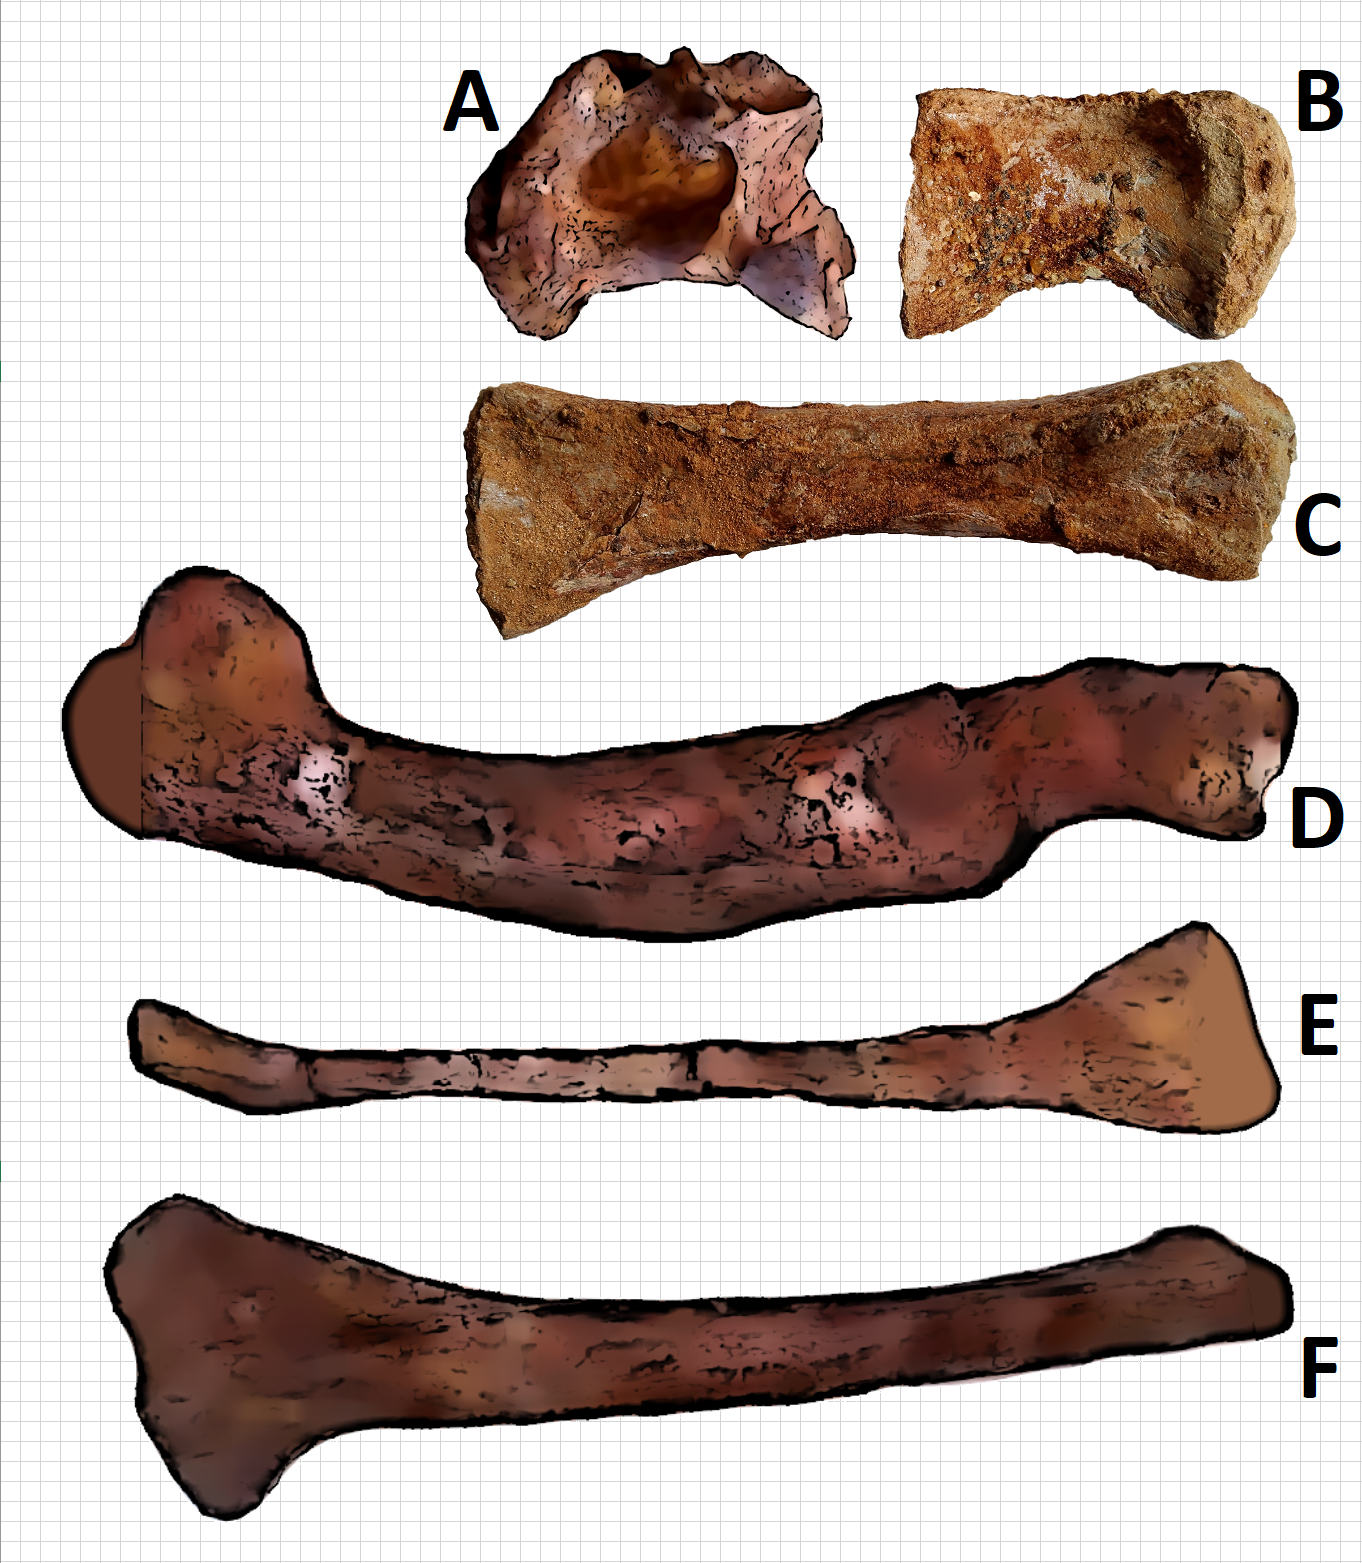 Restoration of both forelimb and hind limbs[4] length in proportional ratio based on dorsal vertebra as standard. From top to bottom: A. anterior dorsal vertebra of Spinosaurus aegyptiacus neotype (FSAC-KK 11888); B. mid dorsal vertebra of Spinosaurid tentatively refer as Spinosaurus dorsojuvencus (Alpha Male 9109); C. radius of Alpha Male 9109; D. femur of neotype FSAC-KK 11888; E. fibula of neotype FSAC-KK 11888; and F. Tibia of neotype FSAC-KK 11888.